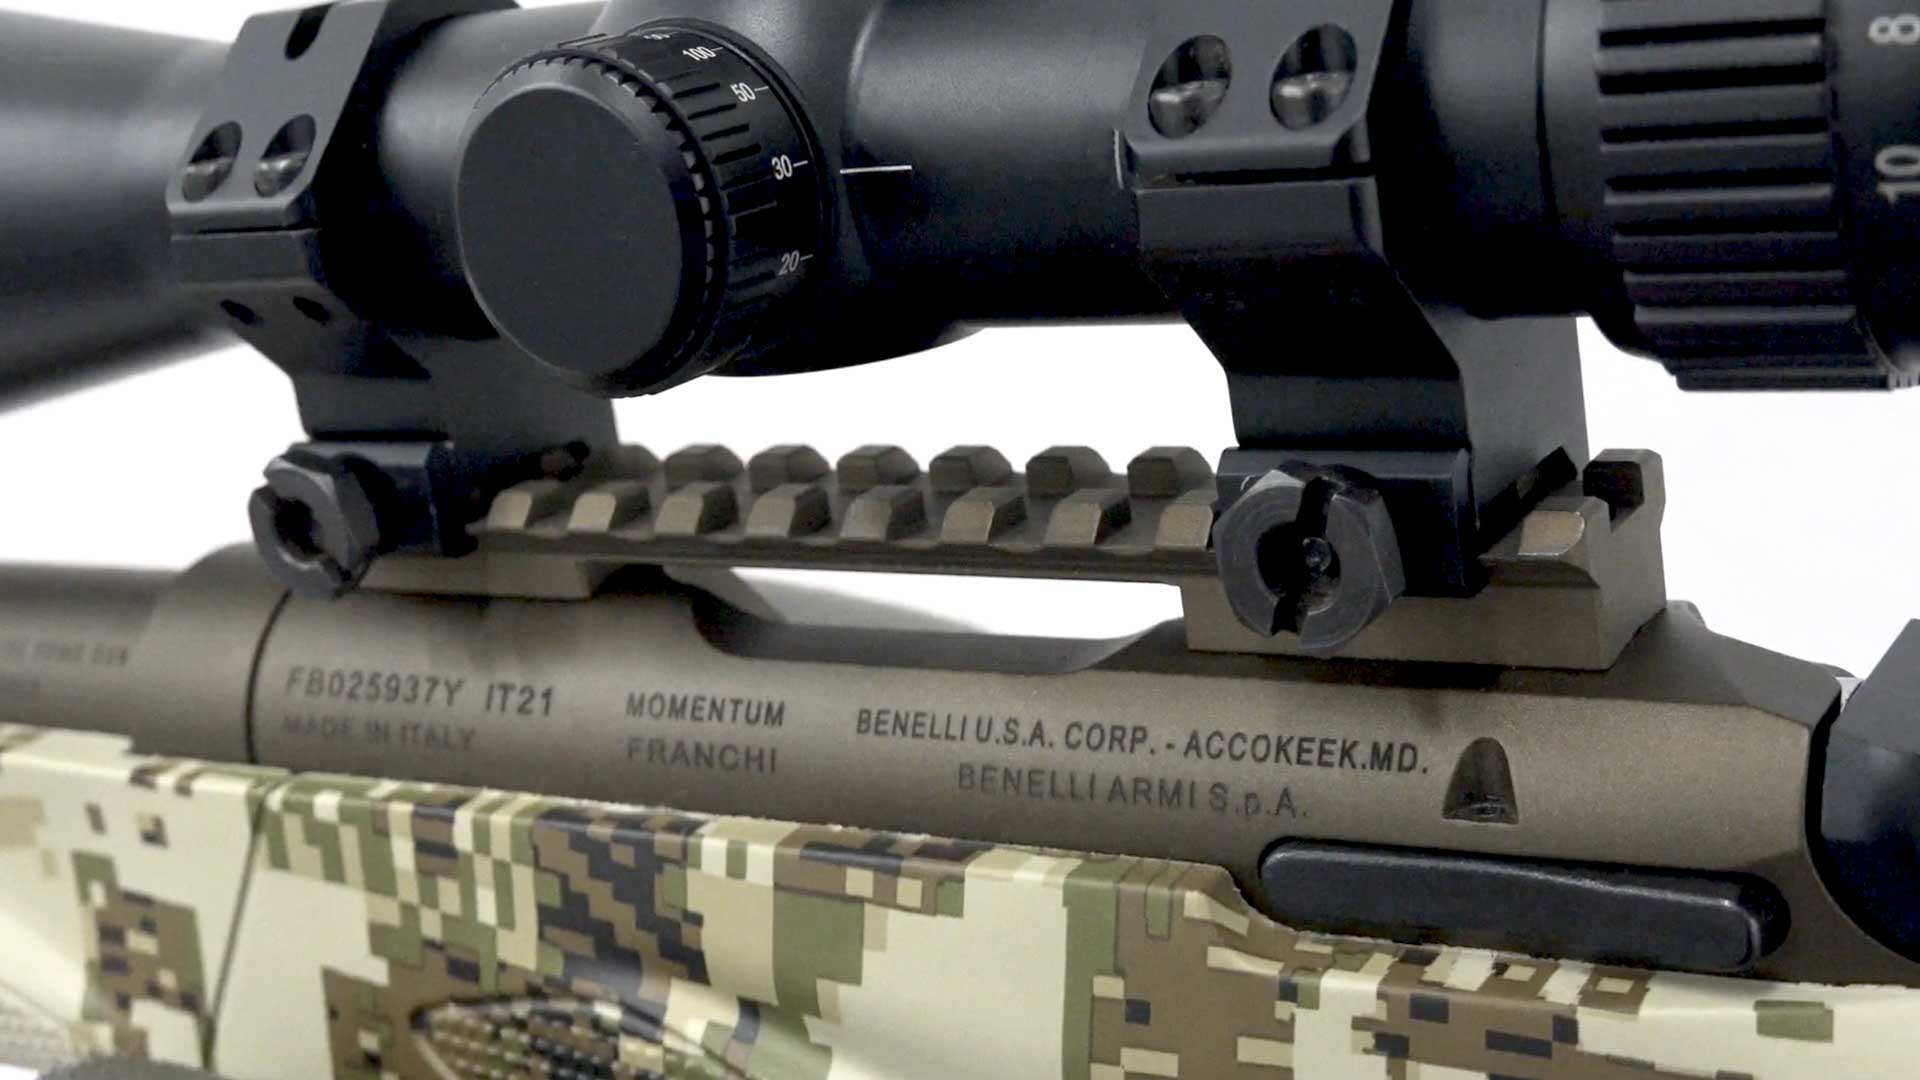 left-side close-up view bolt-action Franchi USA Momentum Elite Varmint rifle hunting gun scope rail receiver camouflage.